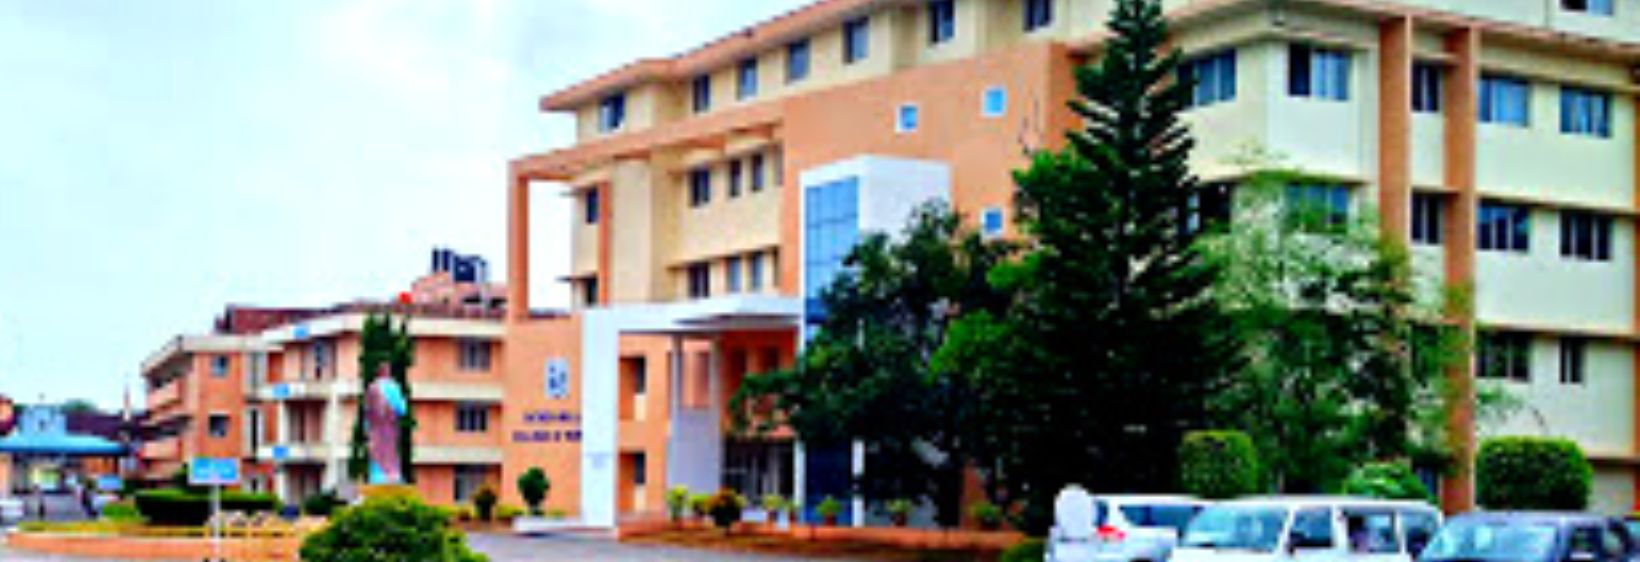 Fr Mullers College of Nursing - Mangalore